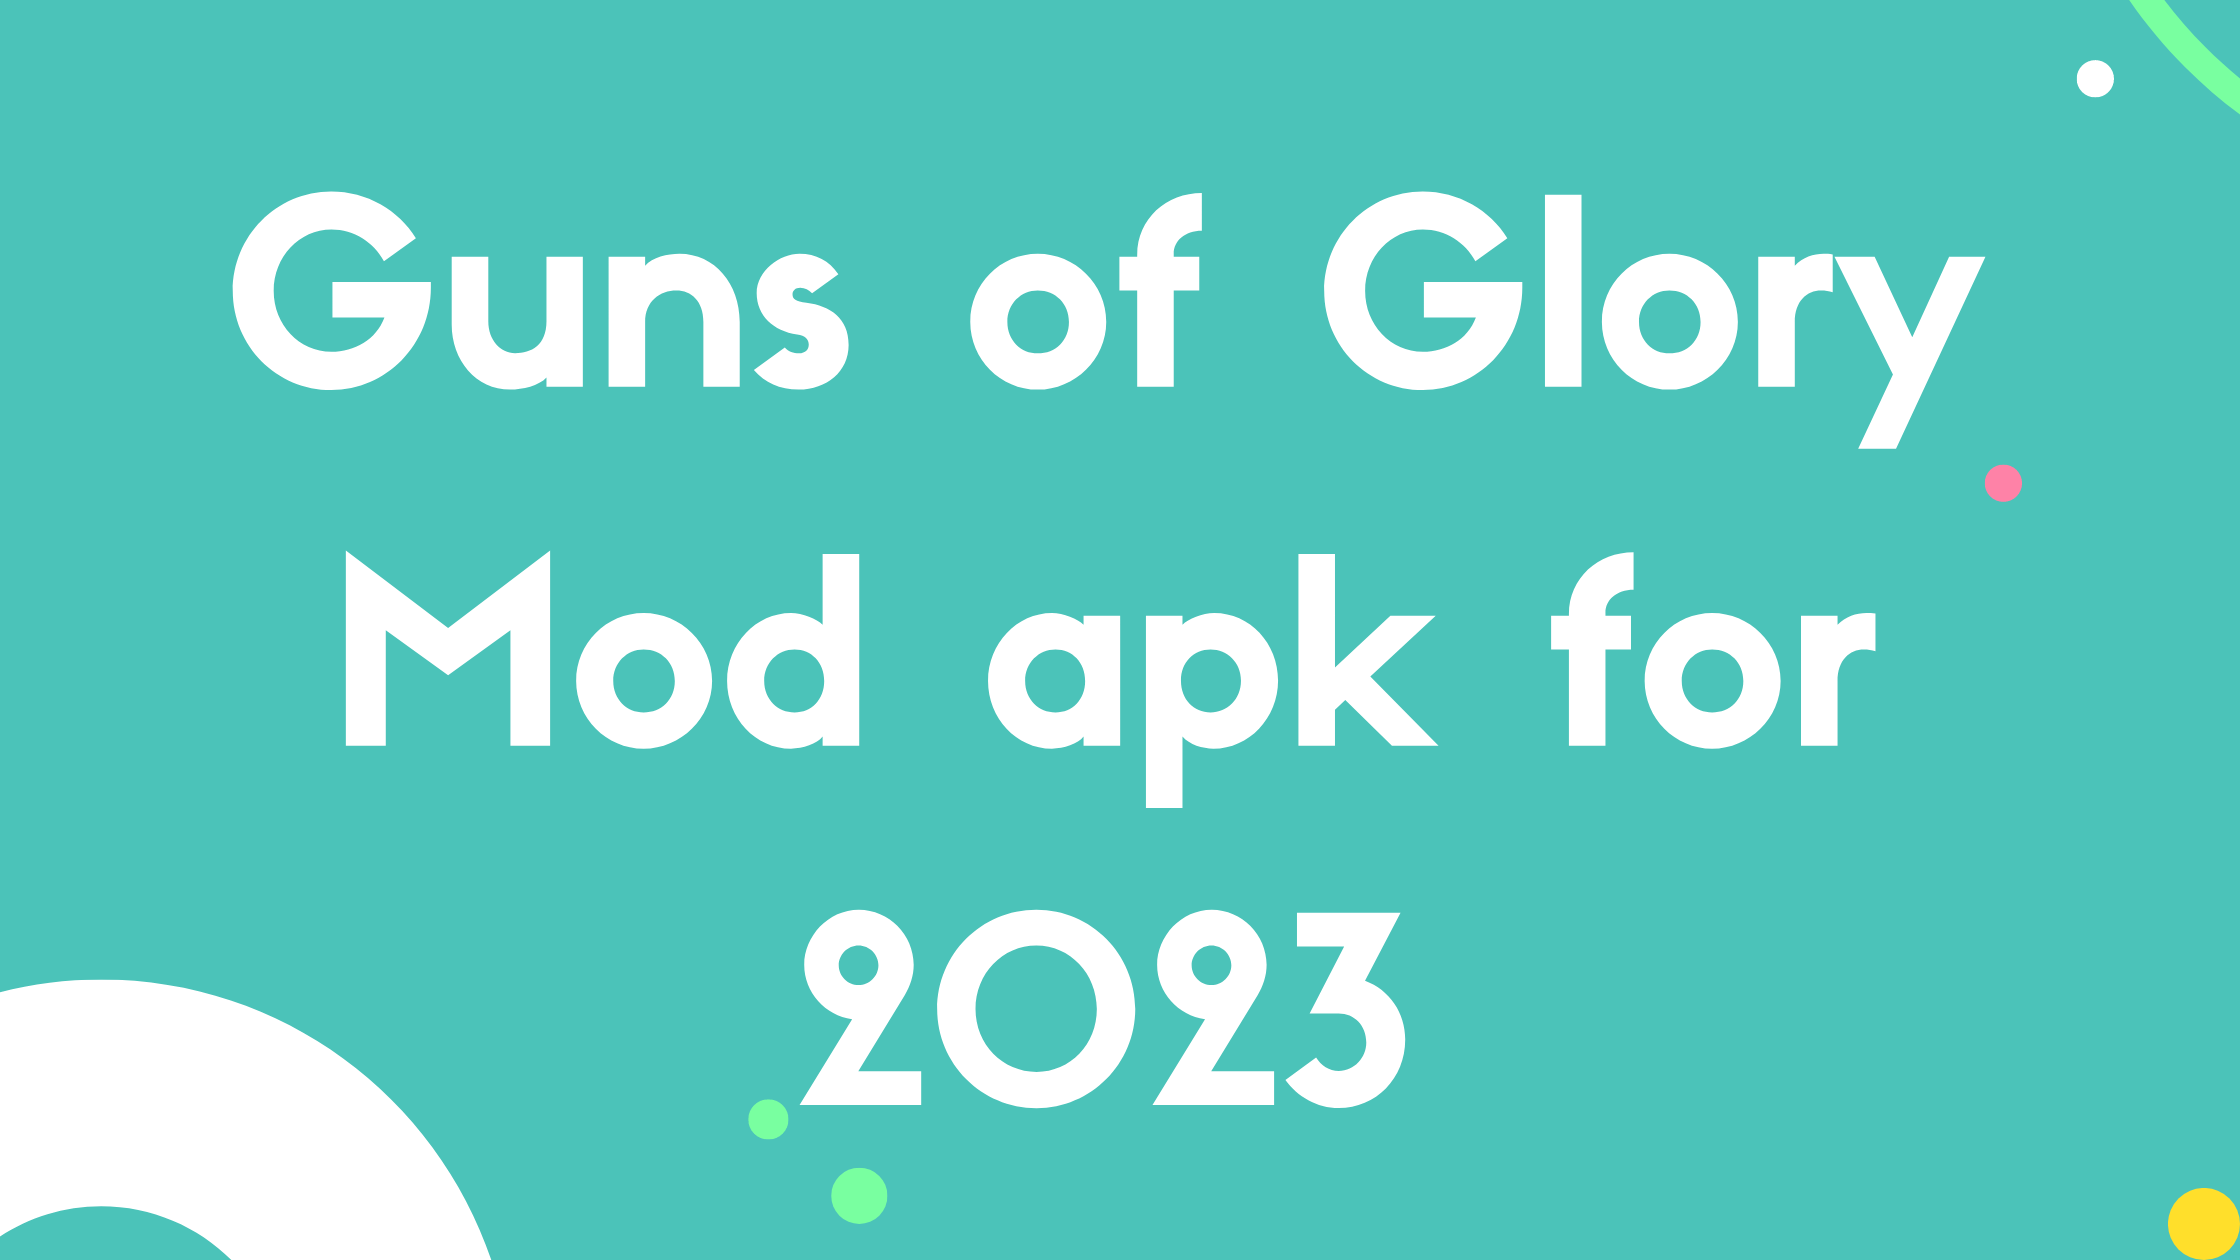 Guns of Glory Mod apk for 2023